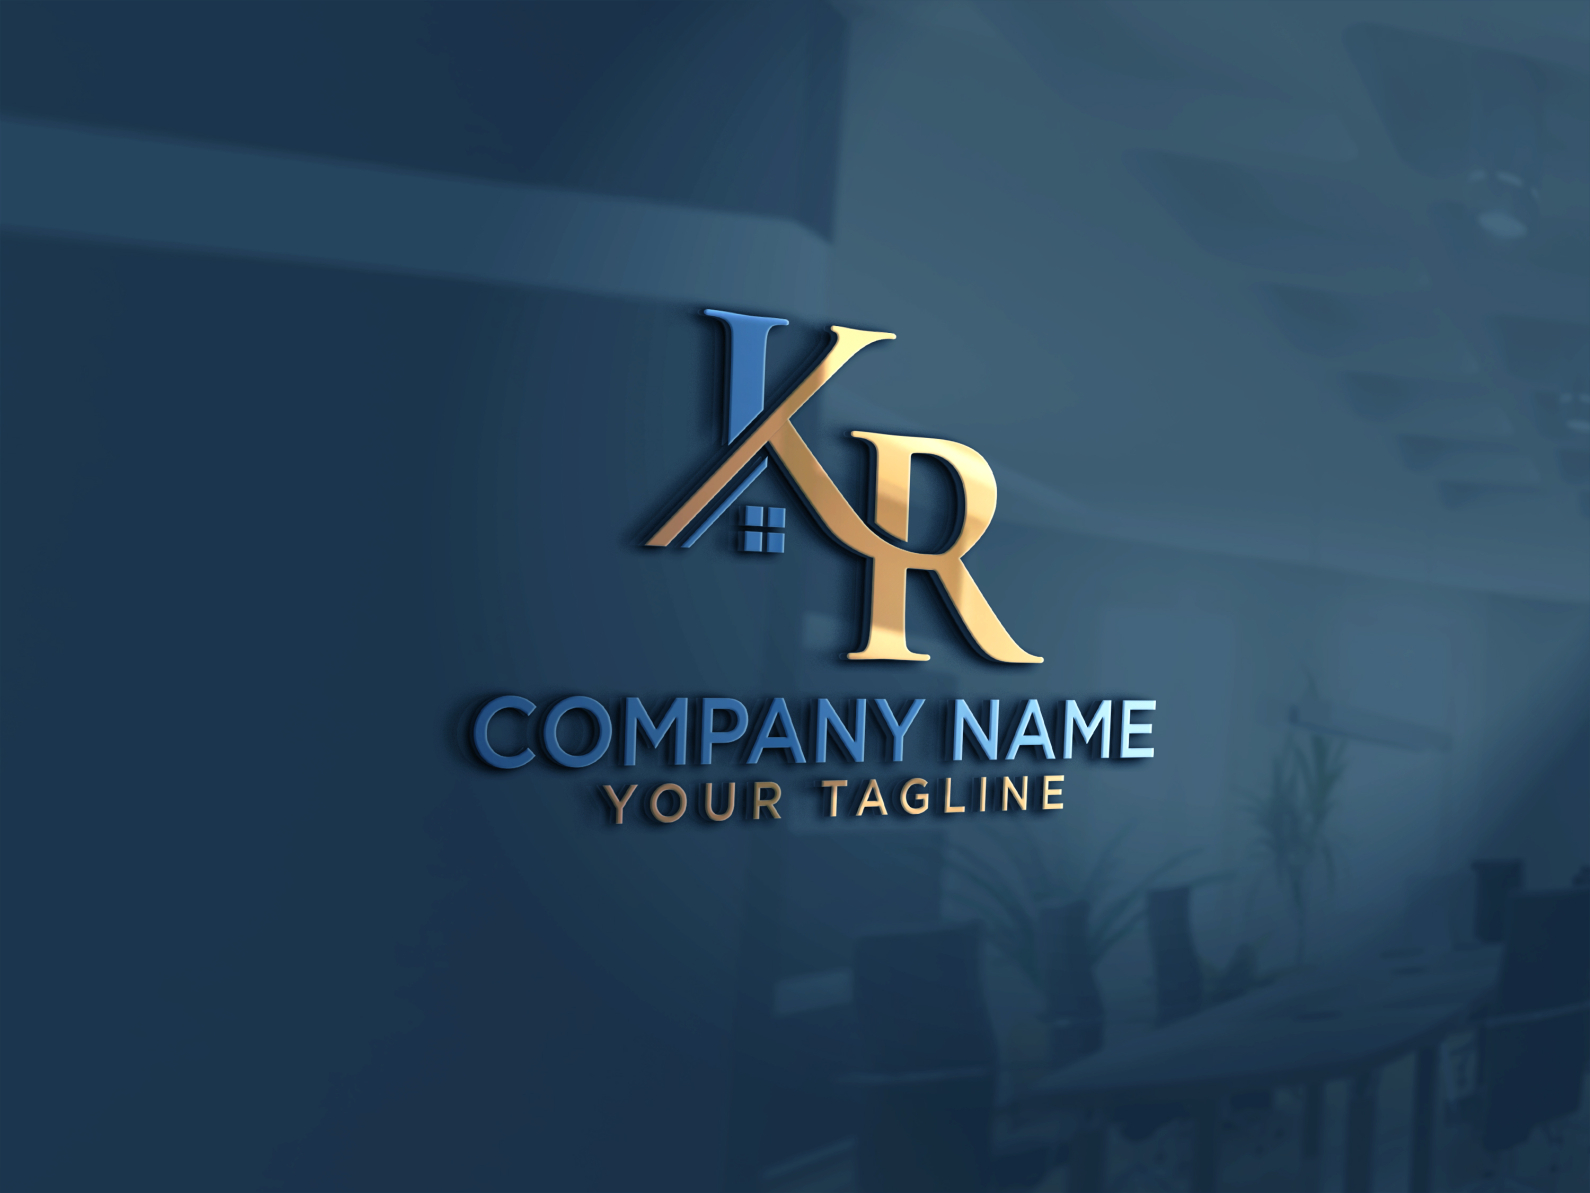 Kr k r letter modern logo design with yellow Vector Image